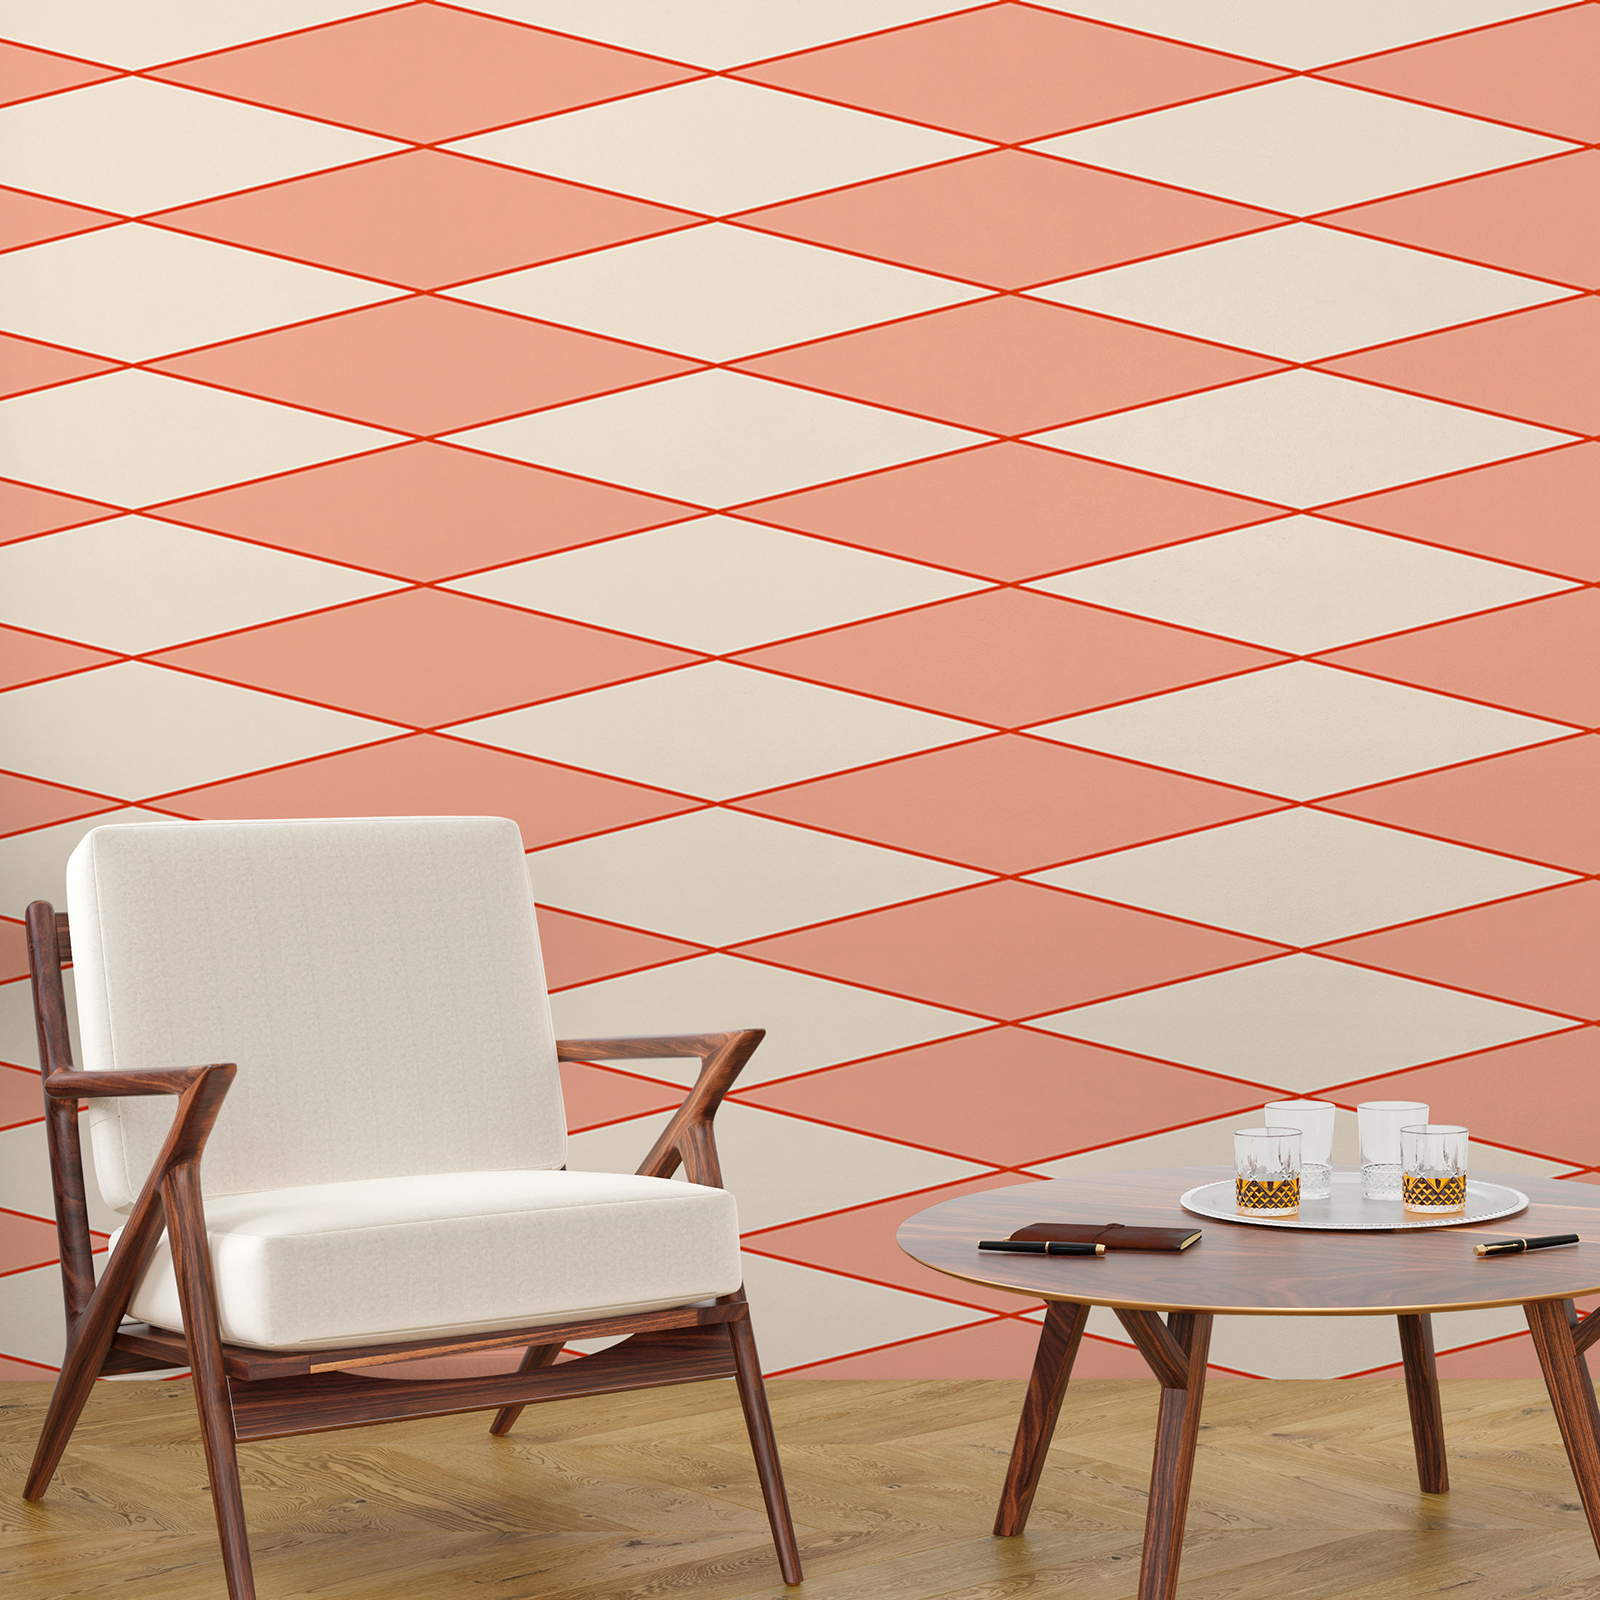         Lozenge & Line Pattern Wallpaper - Orange, Beige | Premium Smooth Non-woven
    